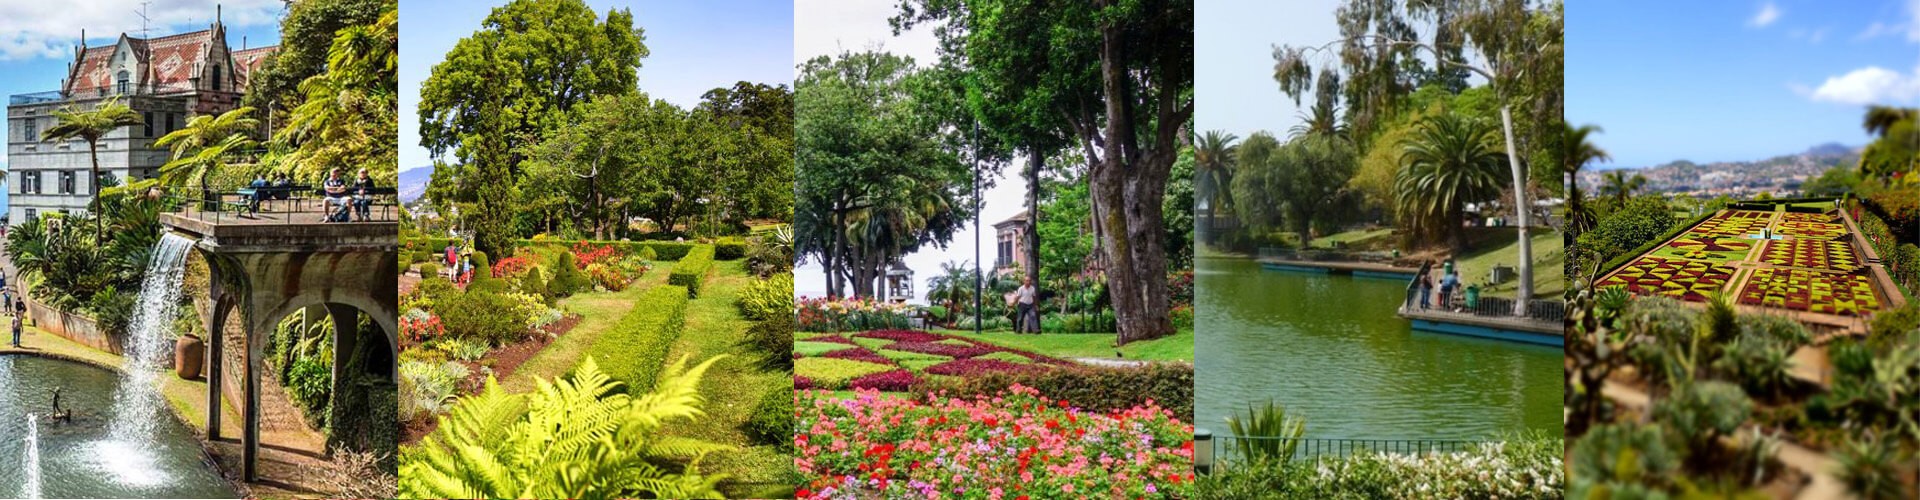 5 Gardens You Must Visit in Funchal